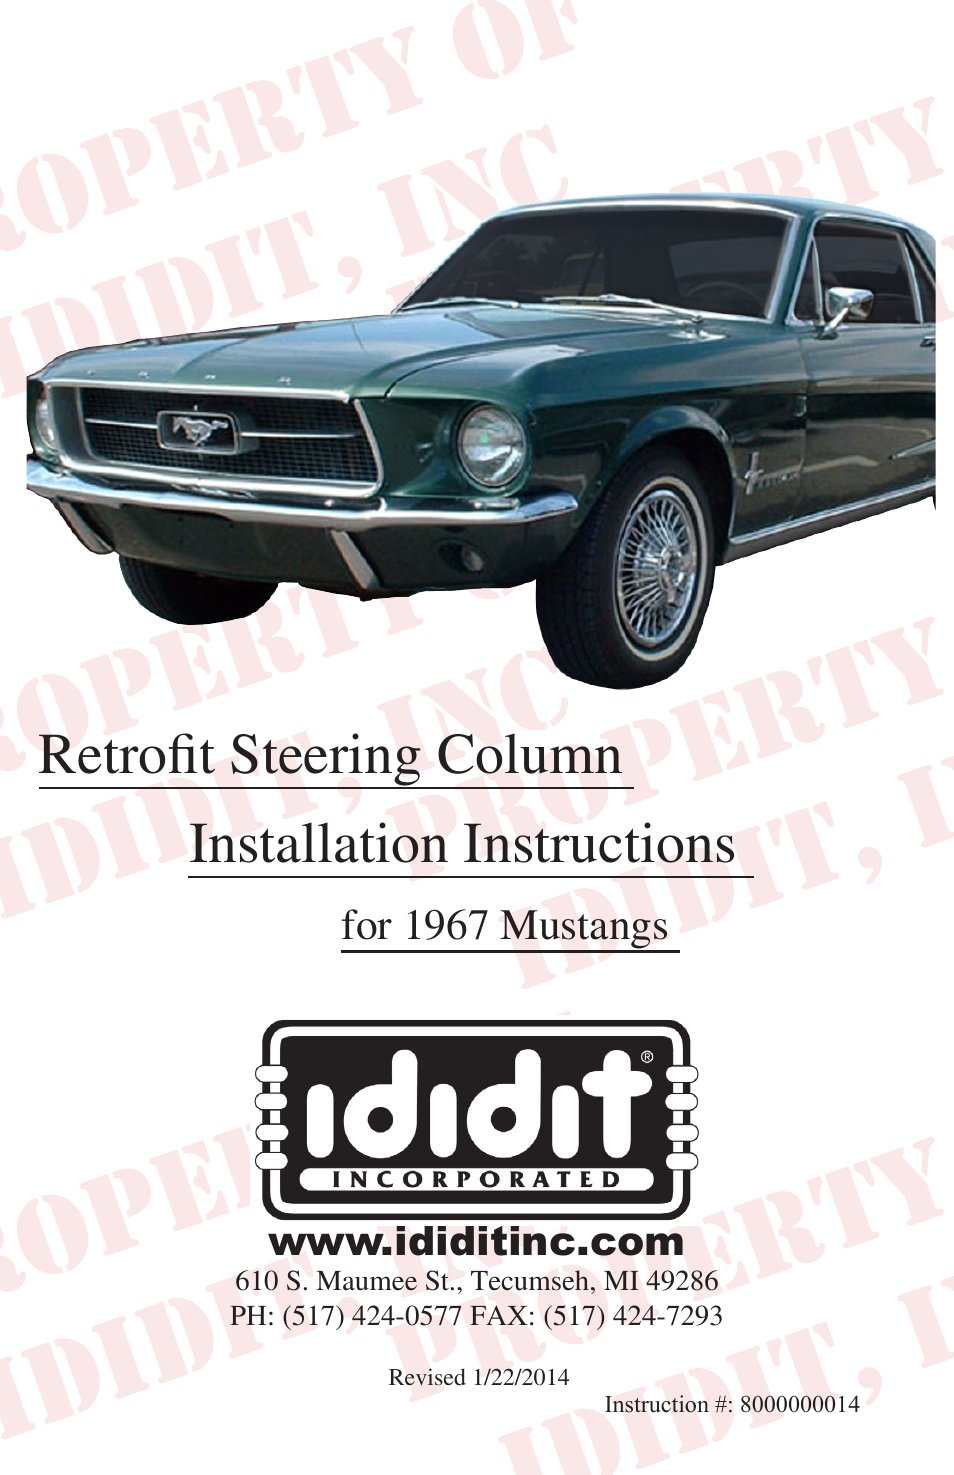 Retrofit Steering Column: 1967 Mustang